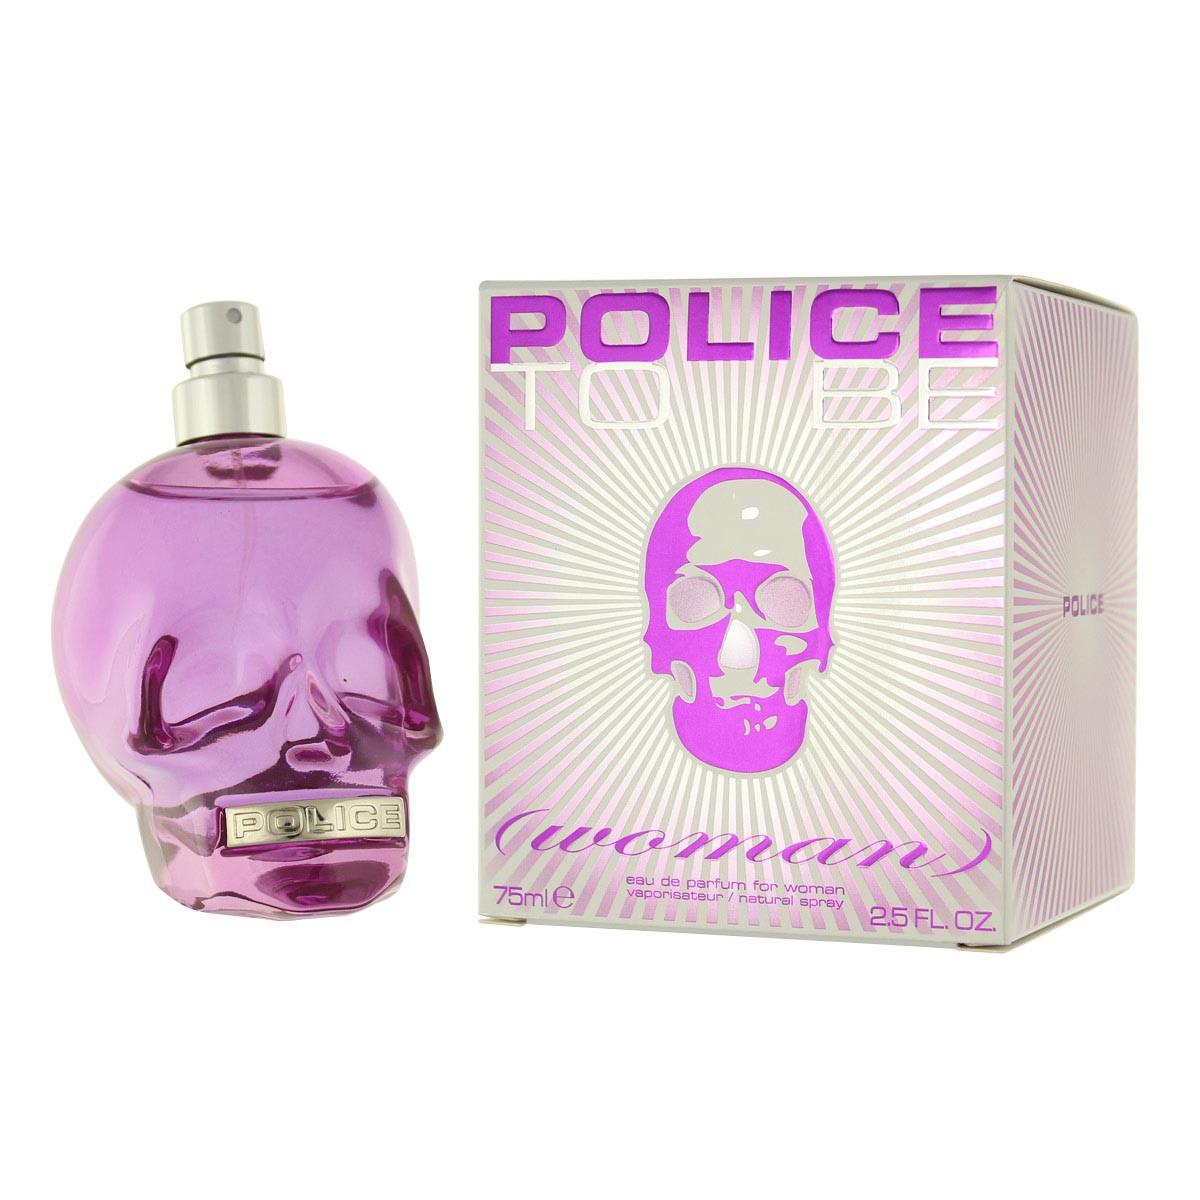 consumo-police-to-be-woman-eau-de-parfum-75ml